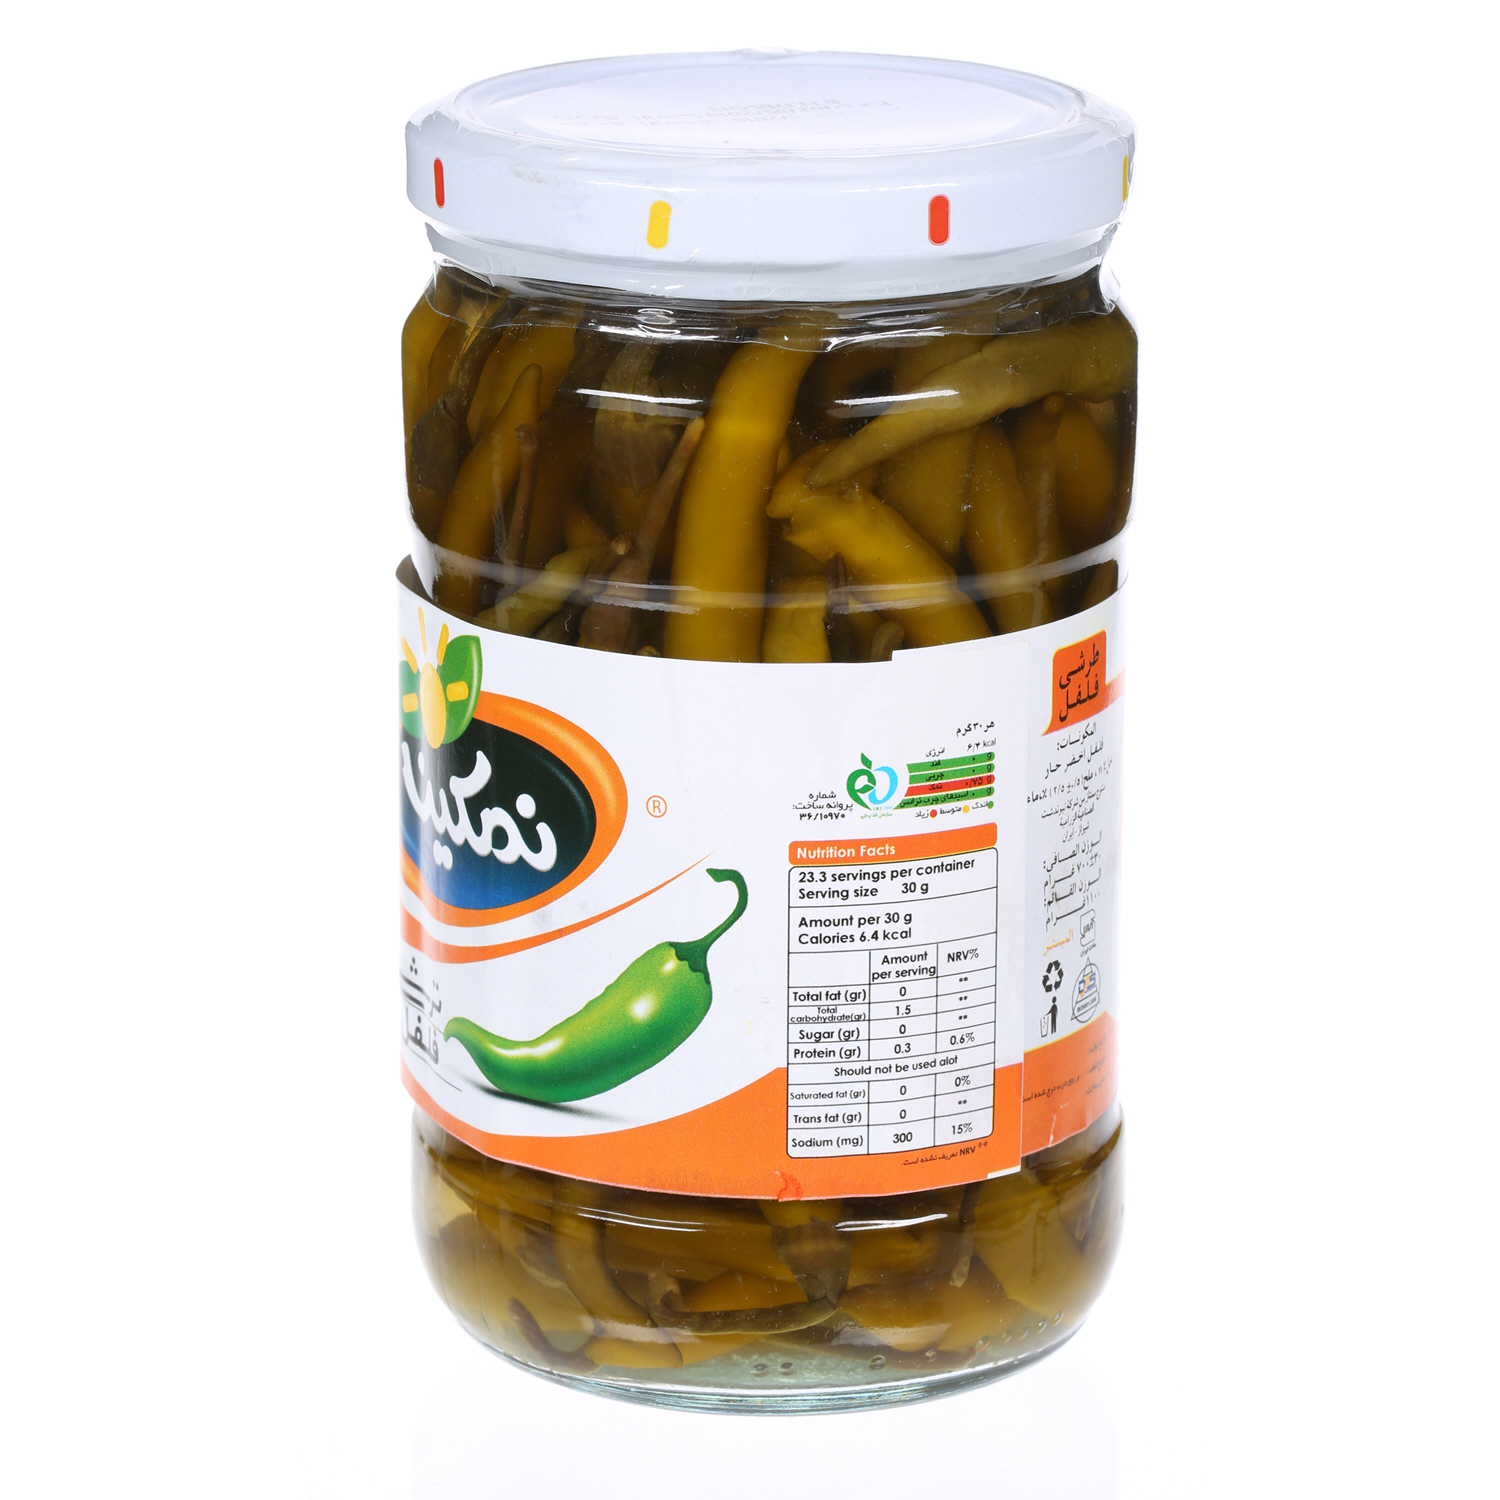 Namakin Chilli Pickle 1Kg